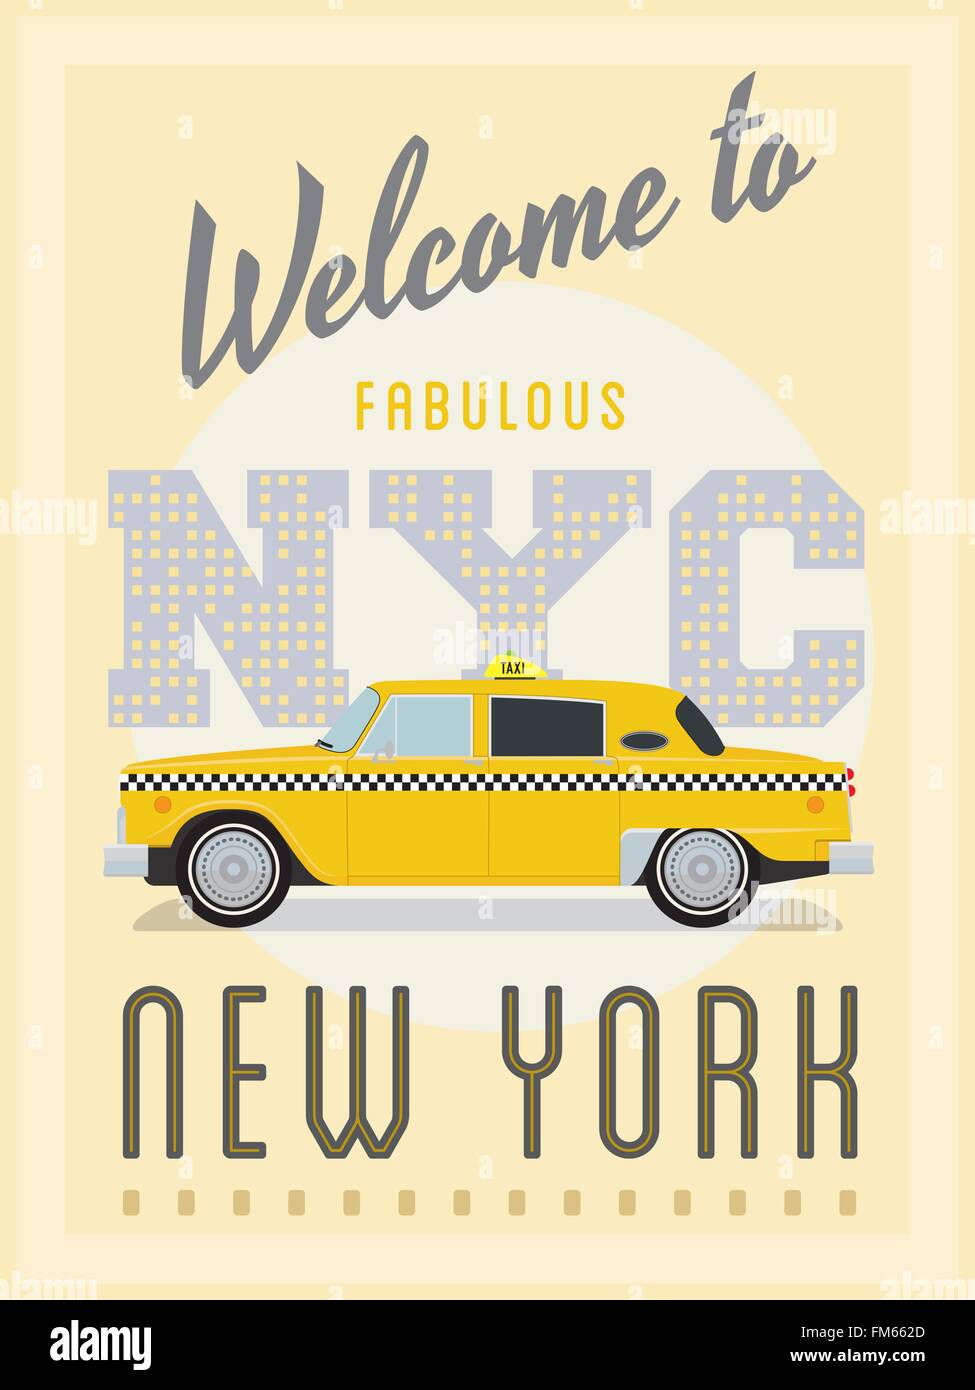 Vintage-Stil Plakatwerbung New York mit gelbes Taxi cab Stock Vektor